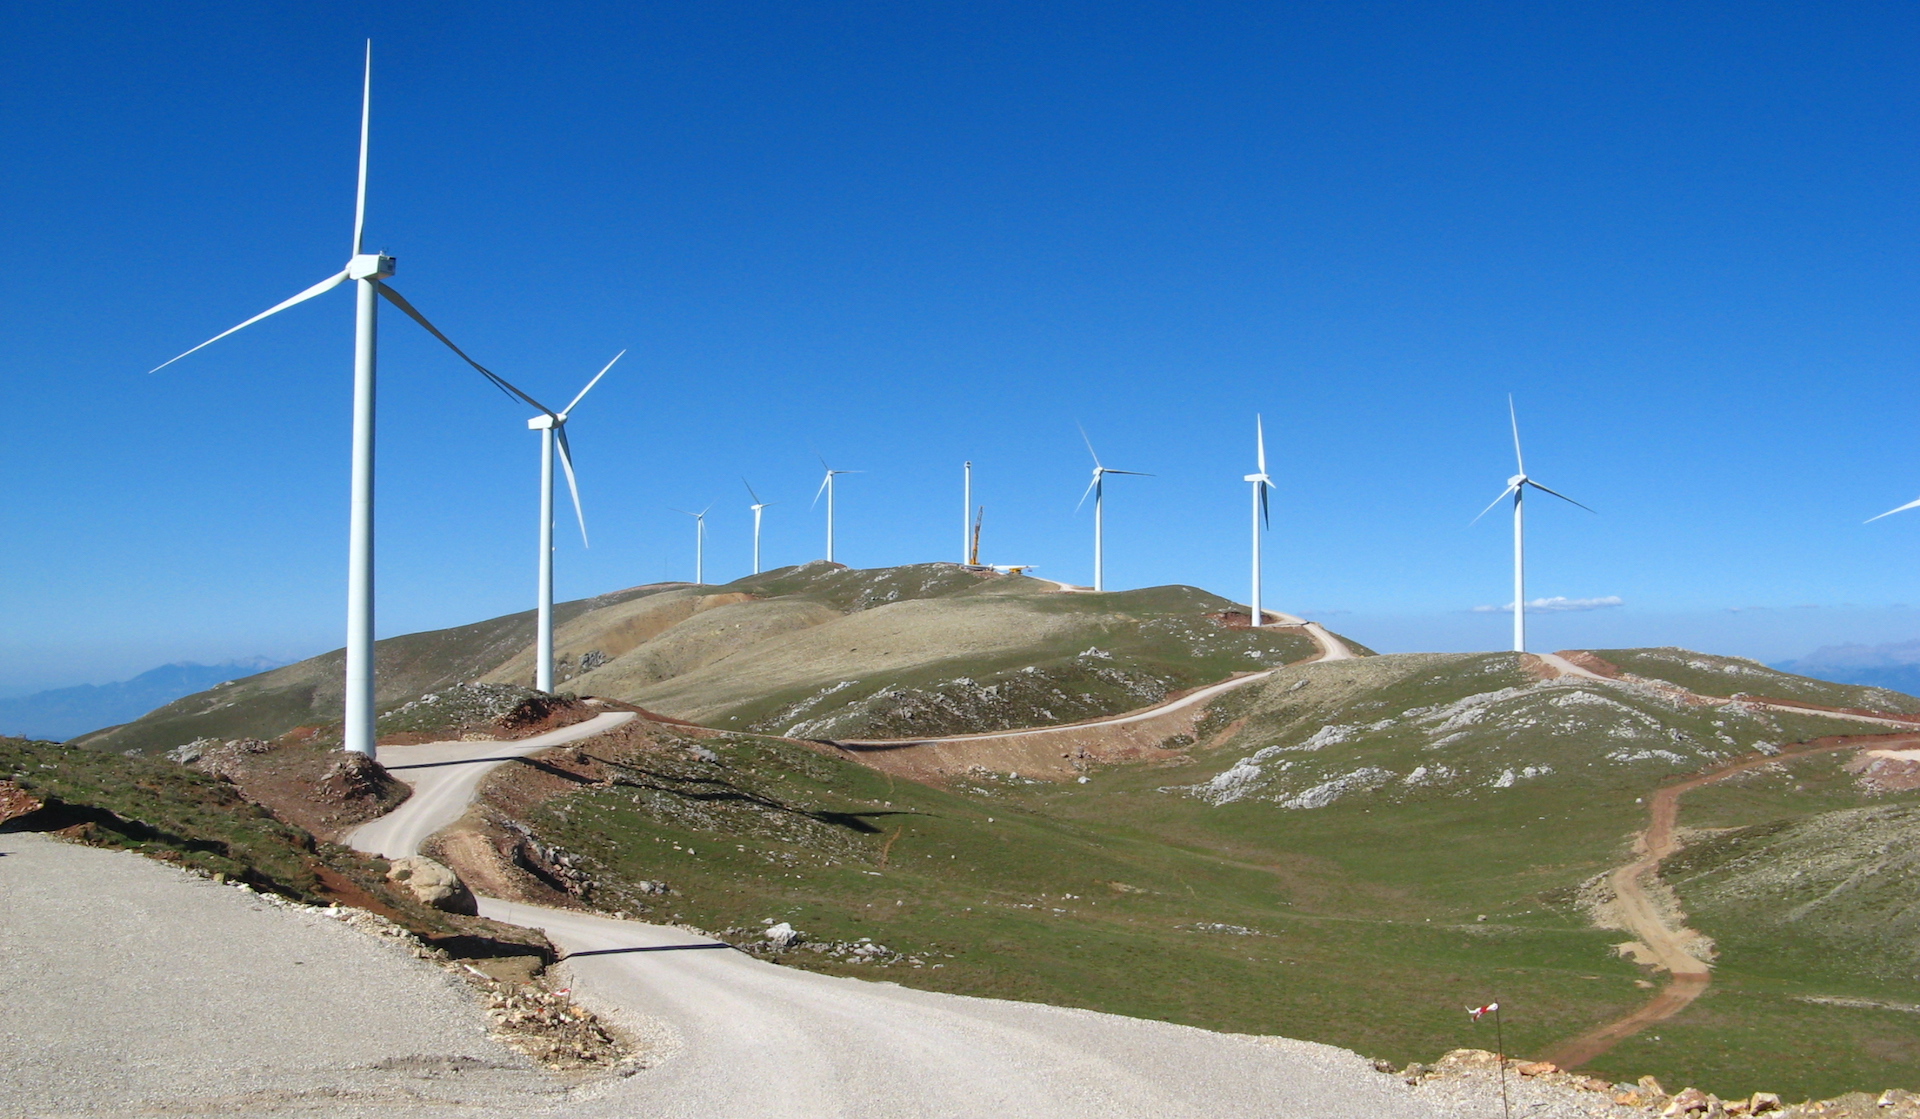 view of turbines along the coastline in the Panachaiko Greece